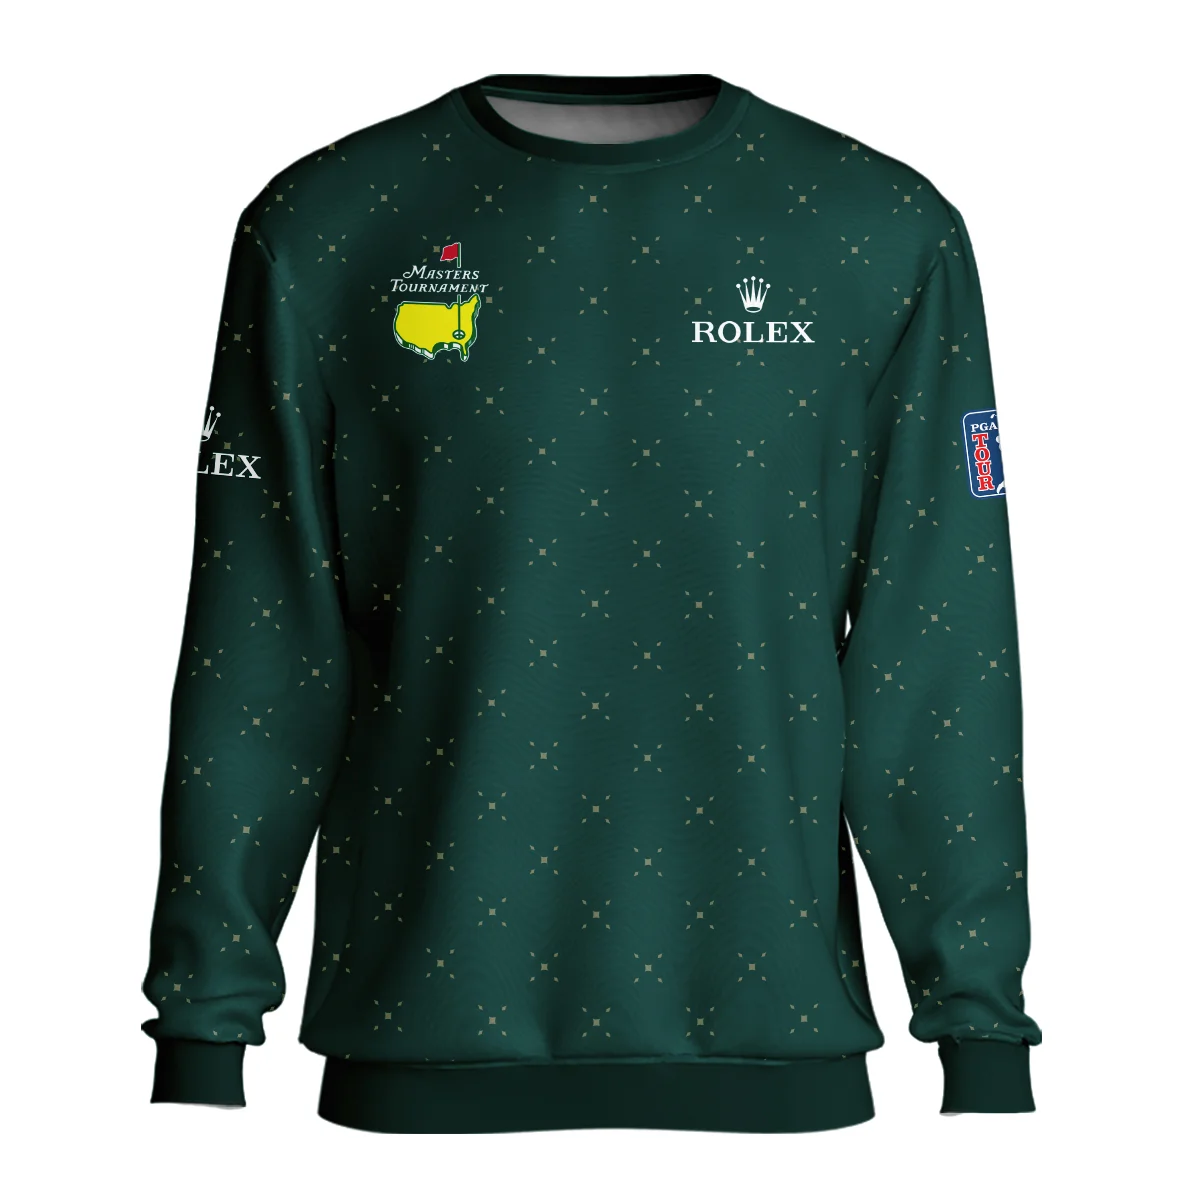 Diamond Shapes With Geometric Pattern Masters Tournament Rolex Unisex Sweatshirt Style Classic Sweatshirt